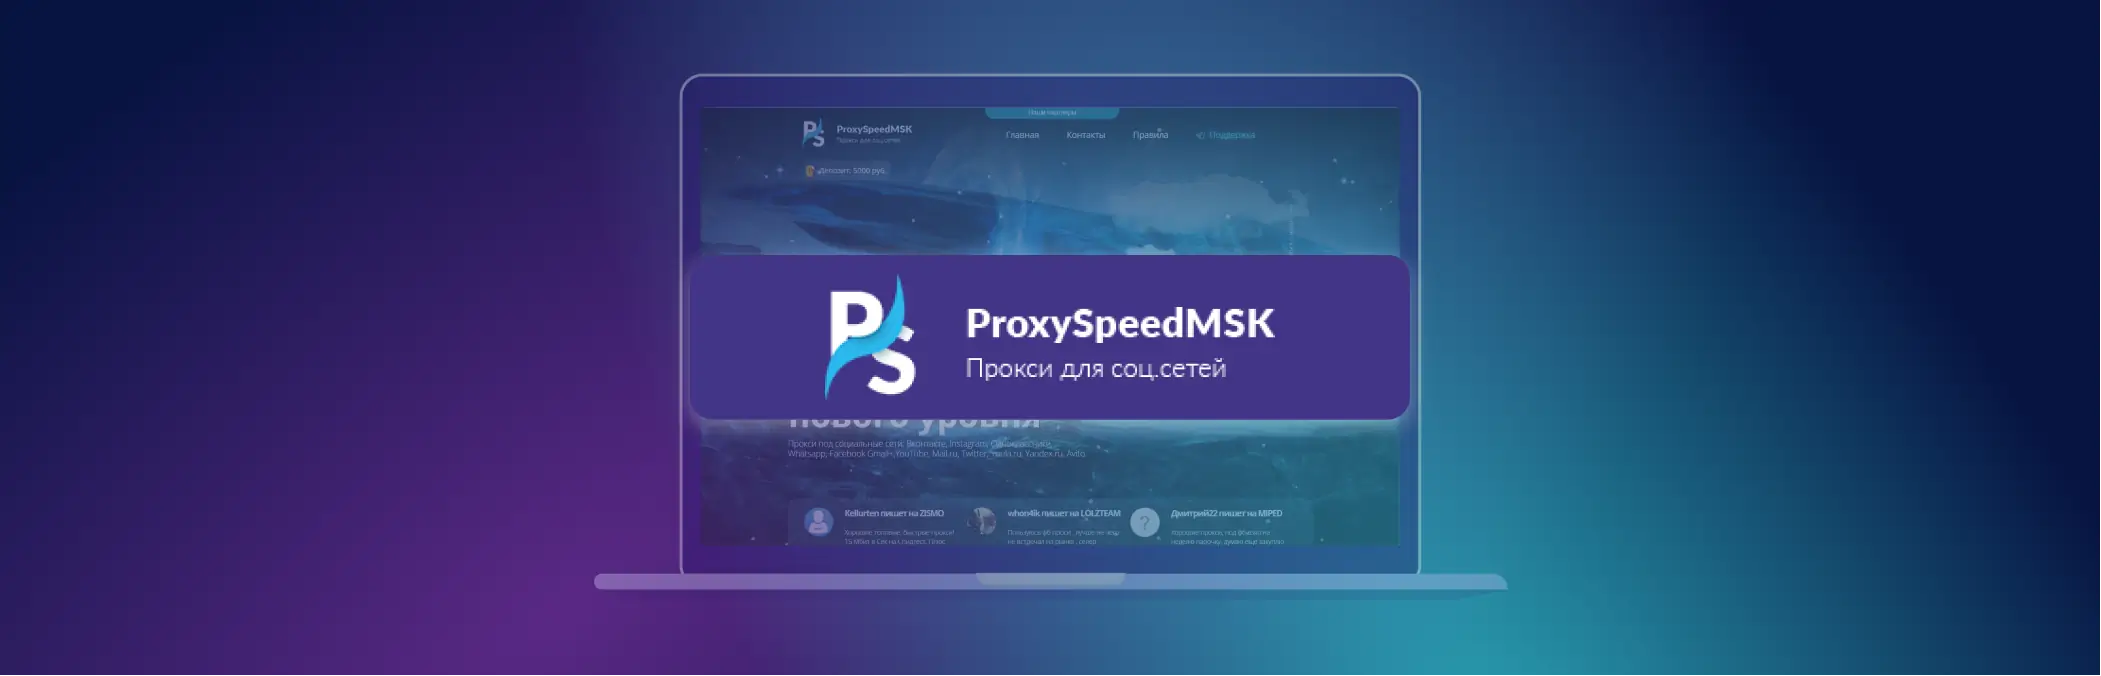 Proxy Móvel: vantagens, tipos e onde comprar - ProxySpeedMSK